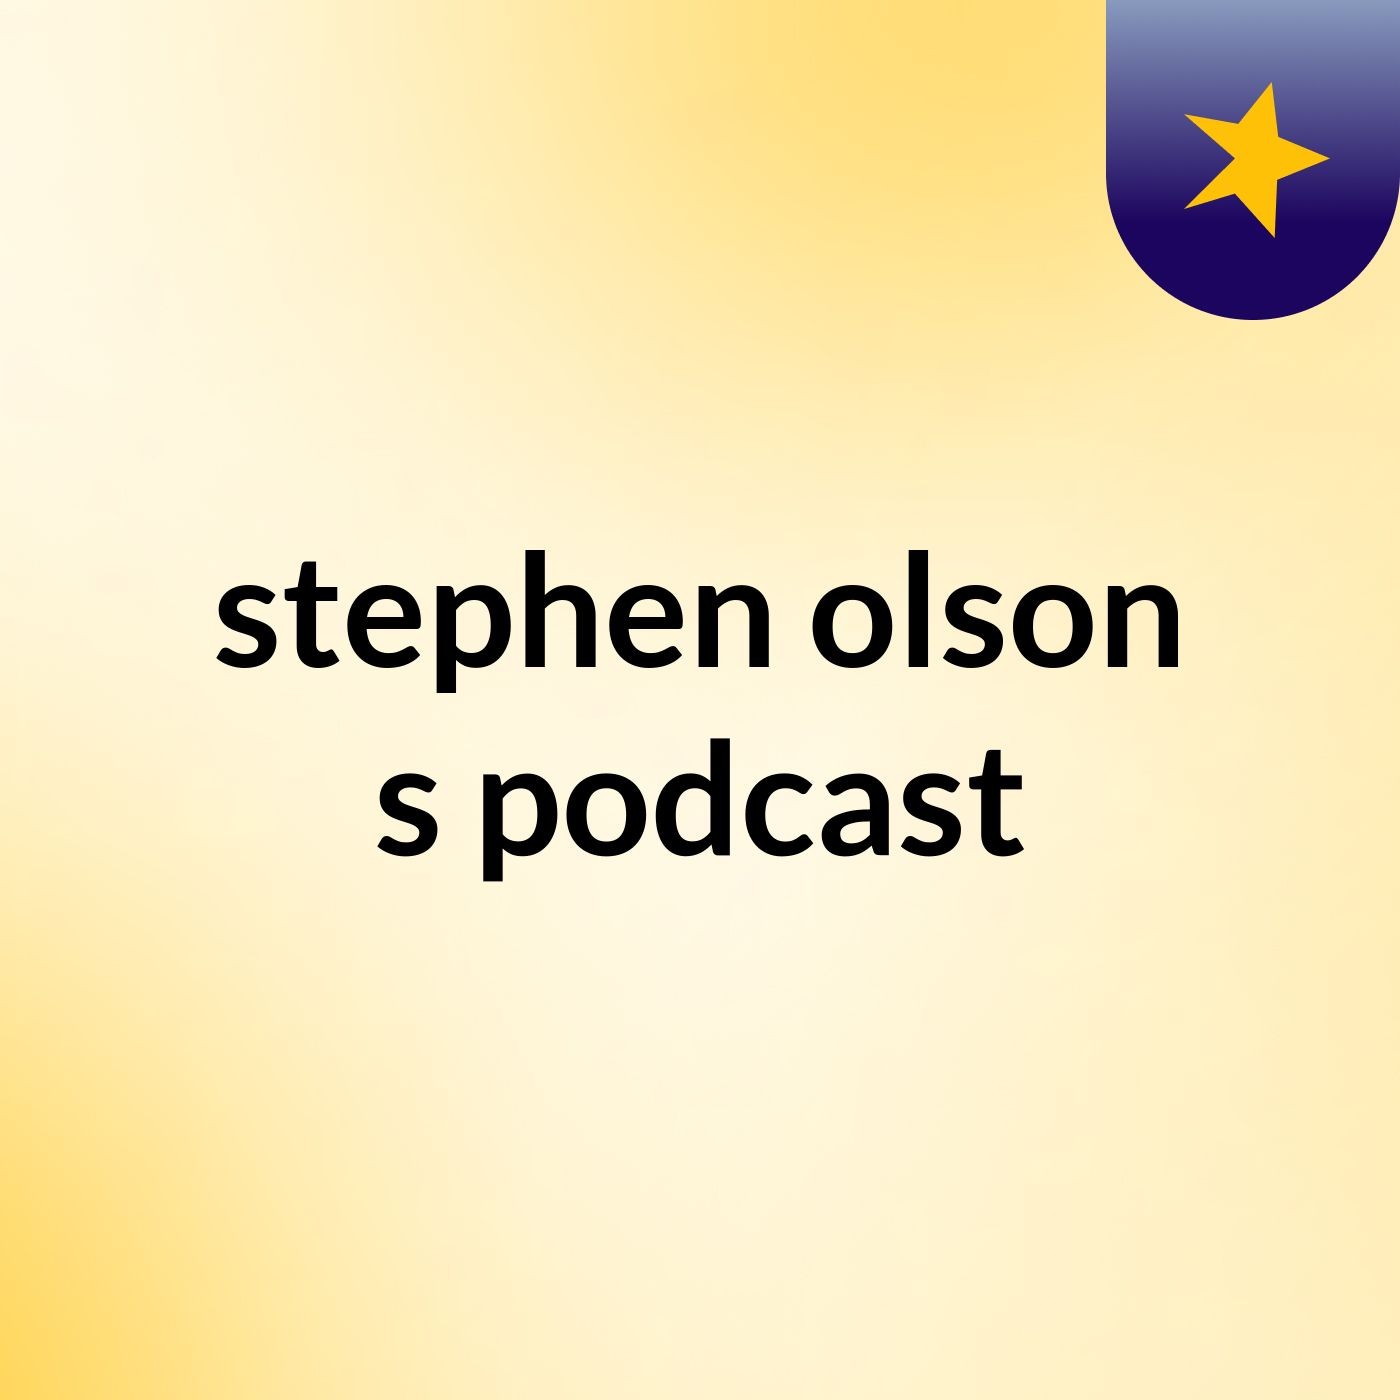 Episode 3 - stephen olson's podcast